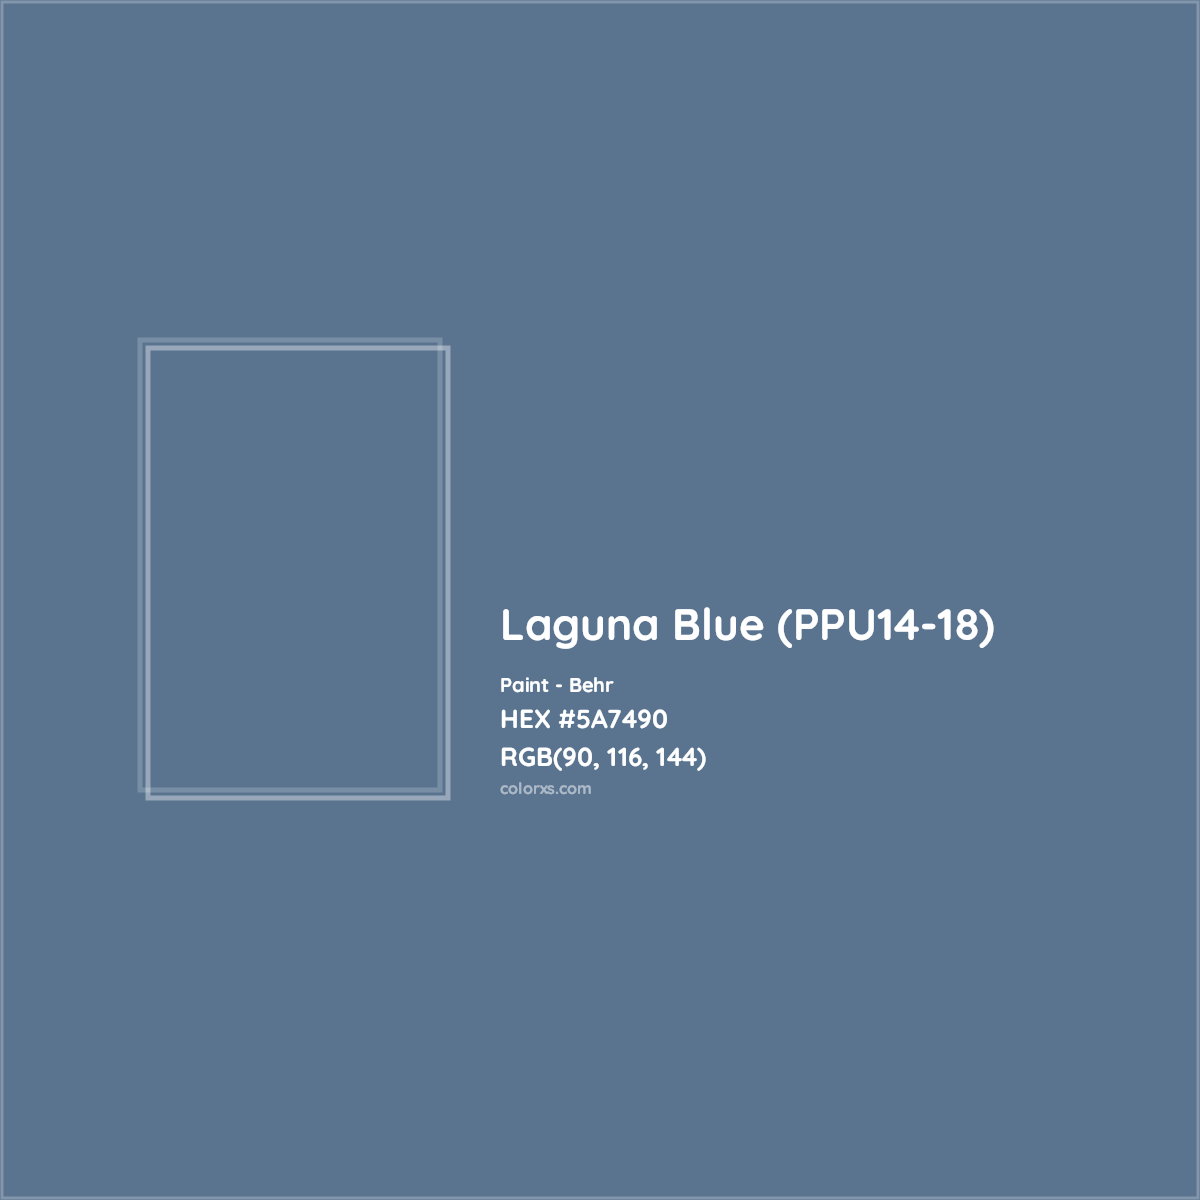 HEX #5A7490 Laguna Blue (PPU14-18) Paint Behr - Color Code